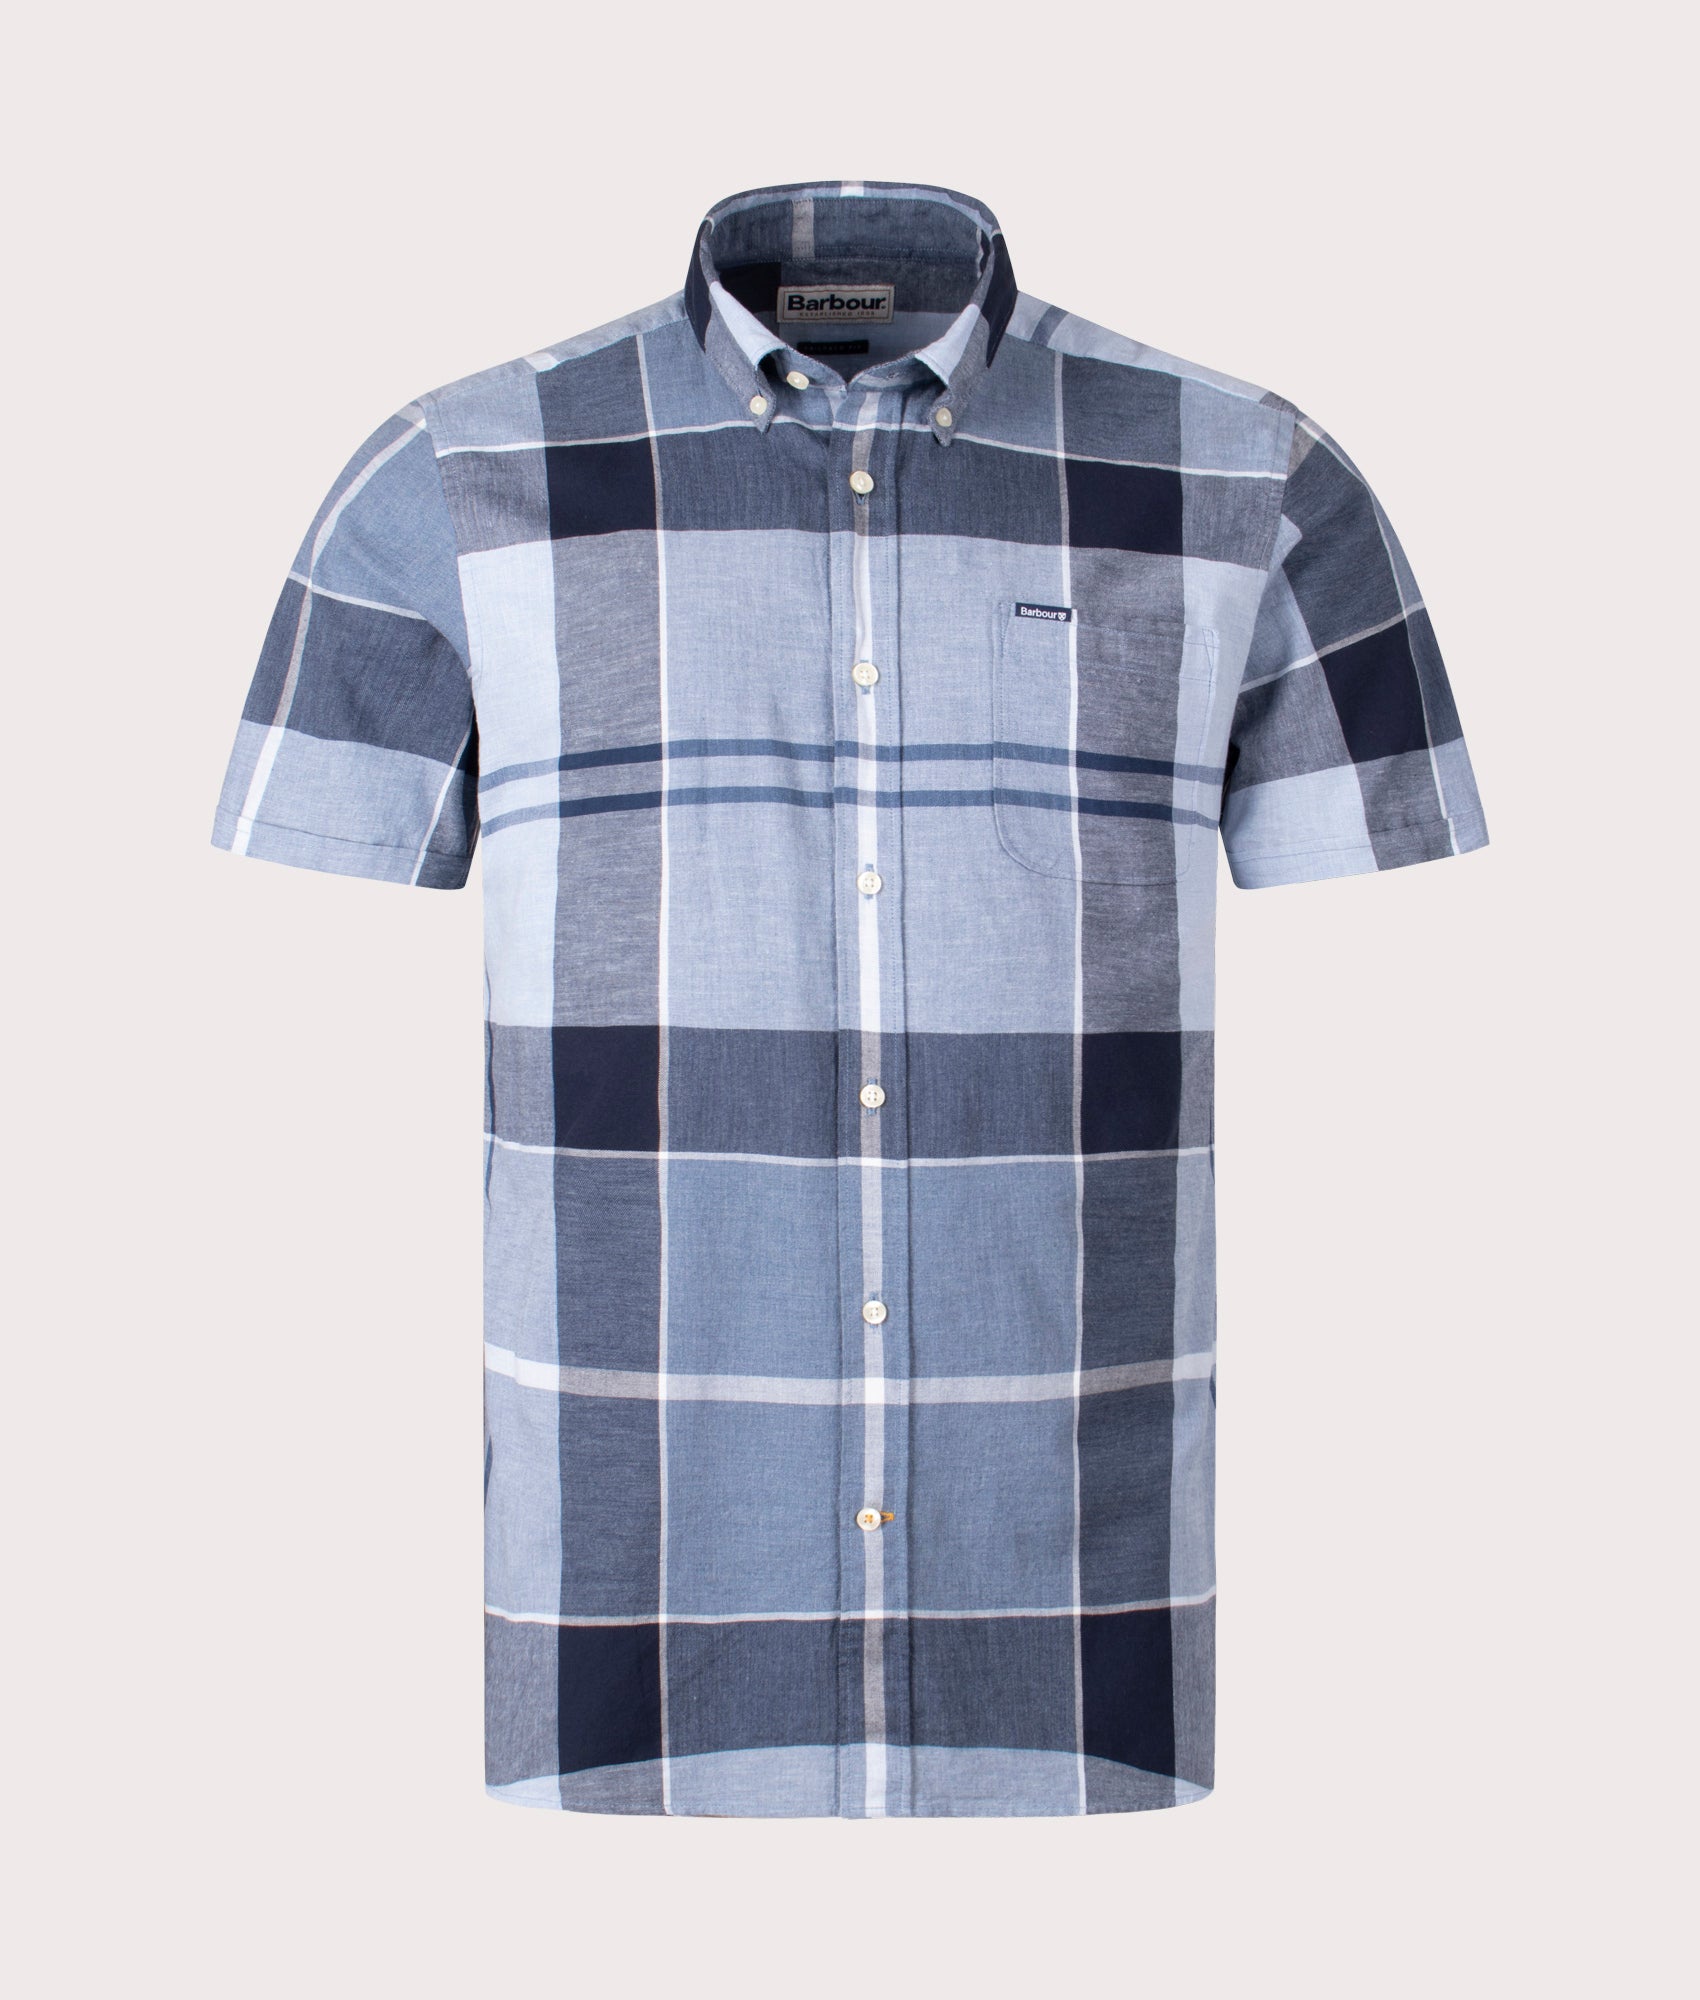 Barbour Lifestyle Mens Short Sleeve Doughill Shirt - Colour: TN22 Berwick Blue - Size: Medium